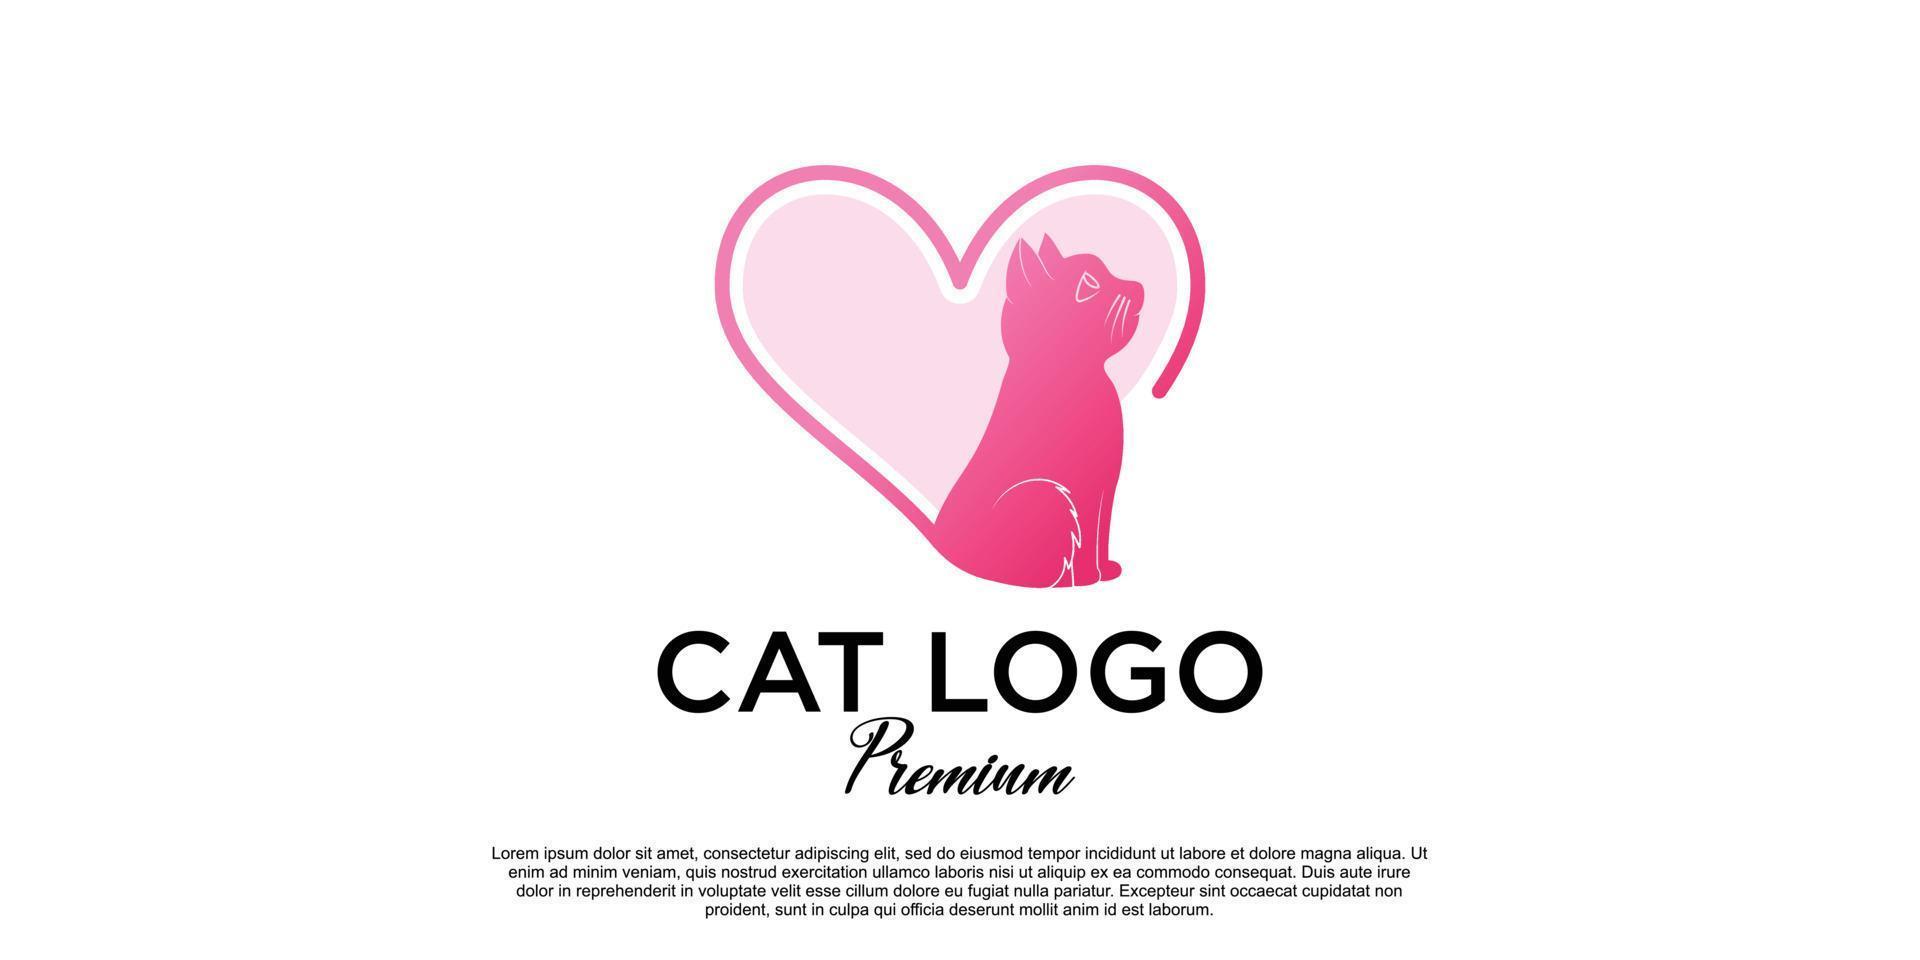 design de logotipo de gato com vetor premium de estilo único criativo